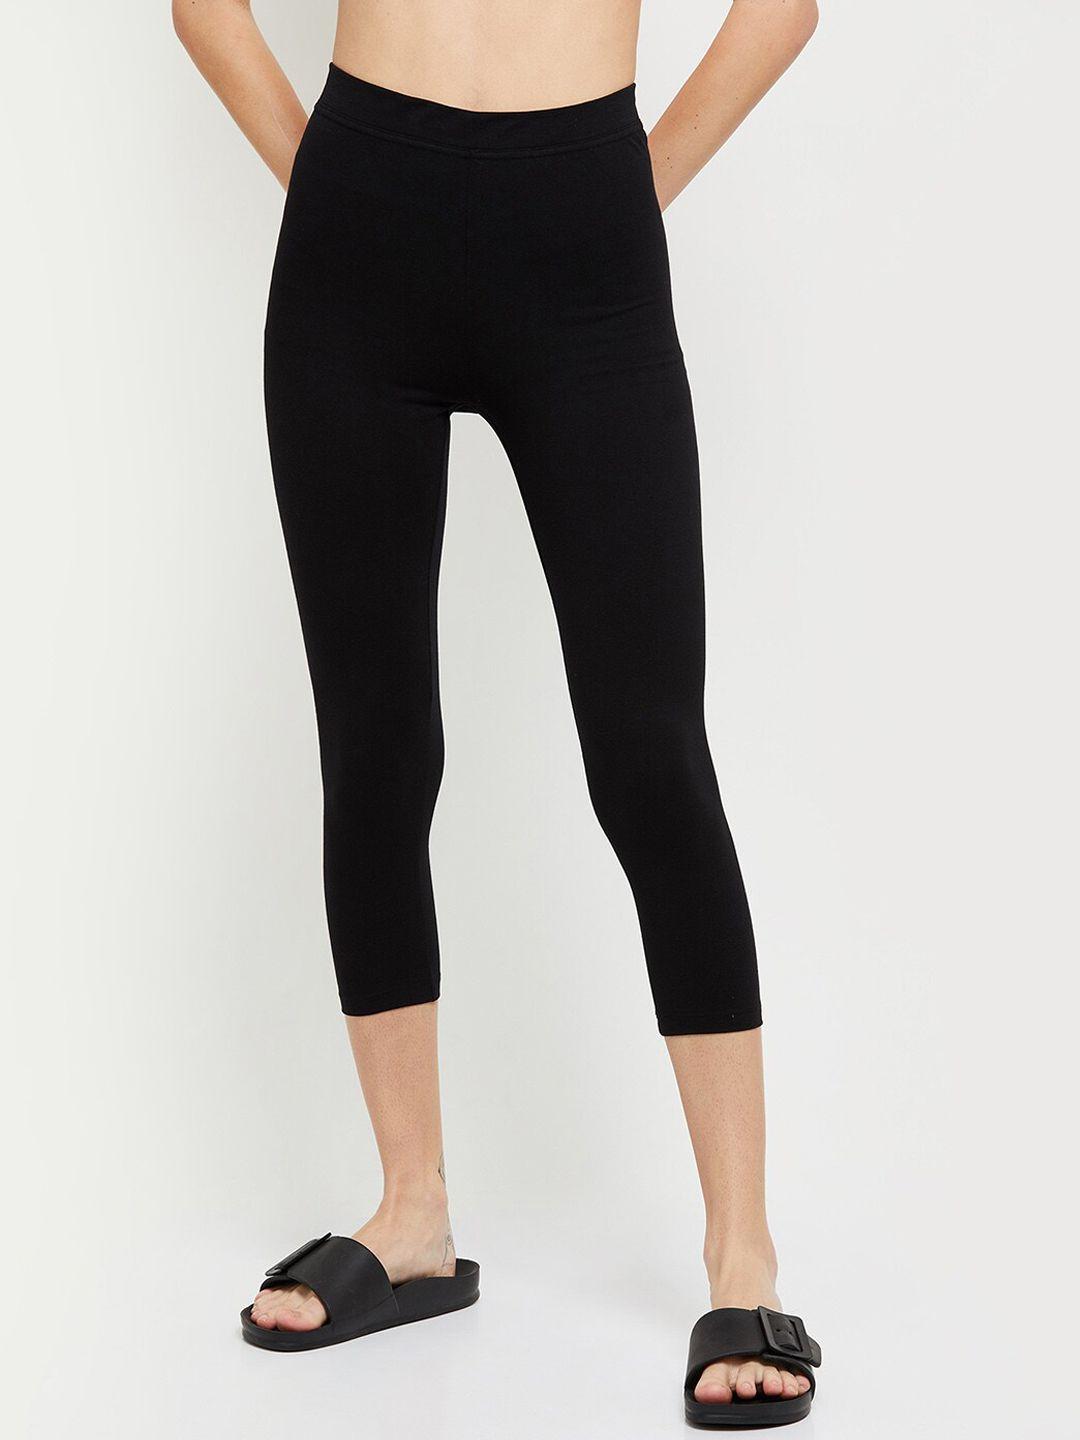 max-women-black-solid-three-fourth-length-leggings